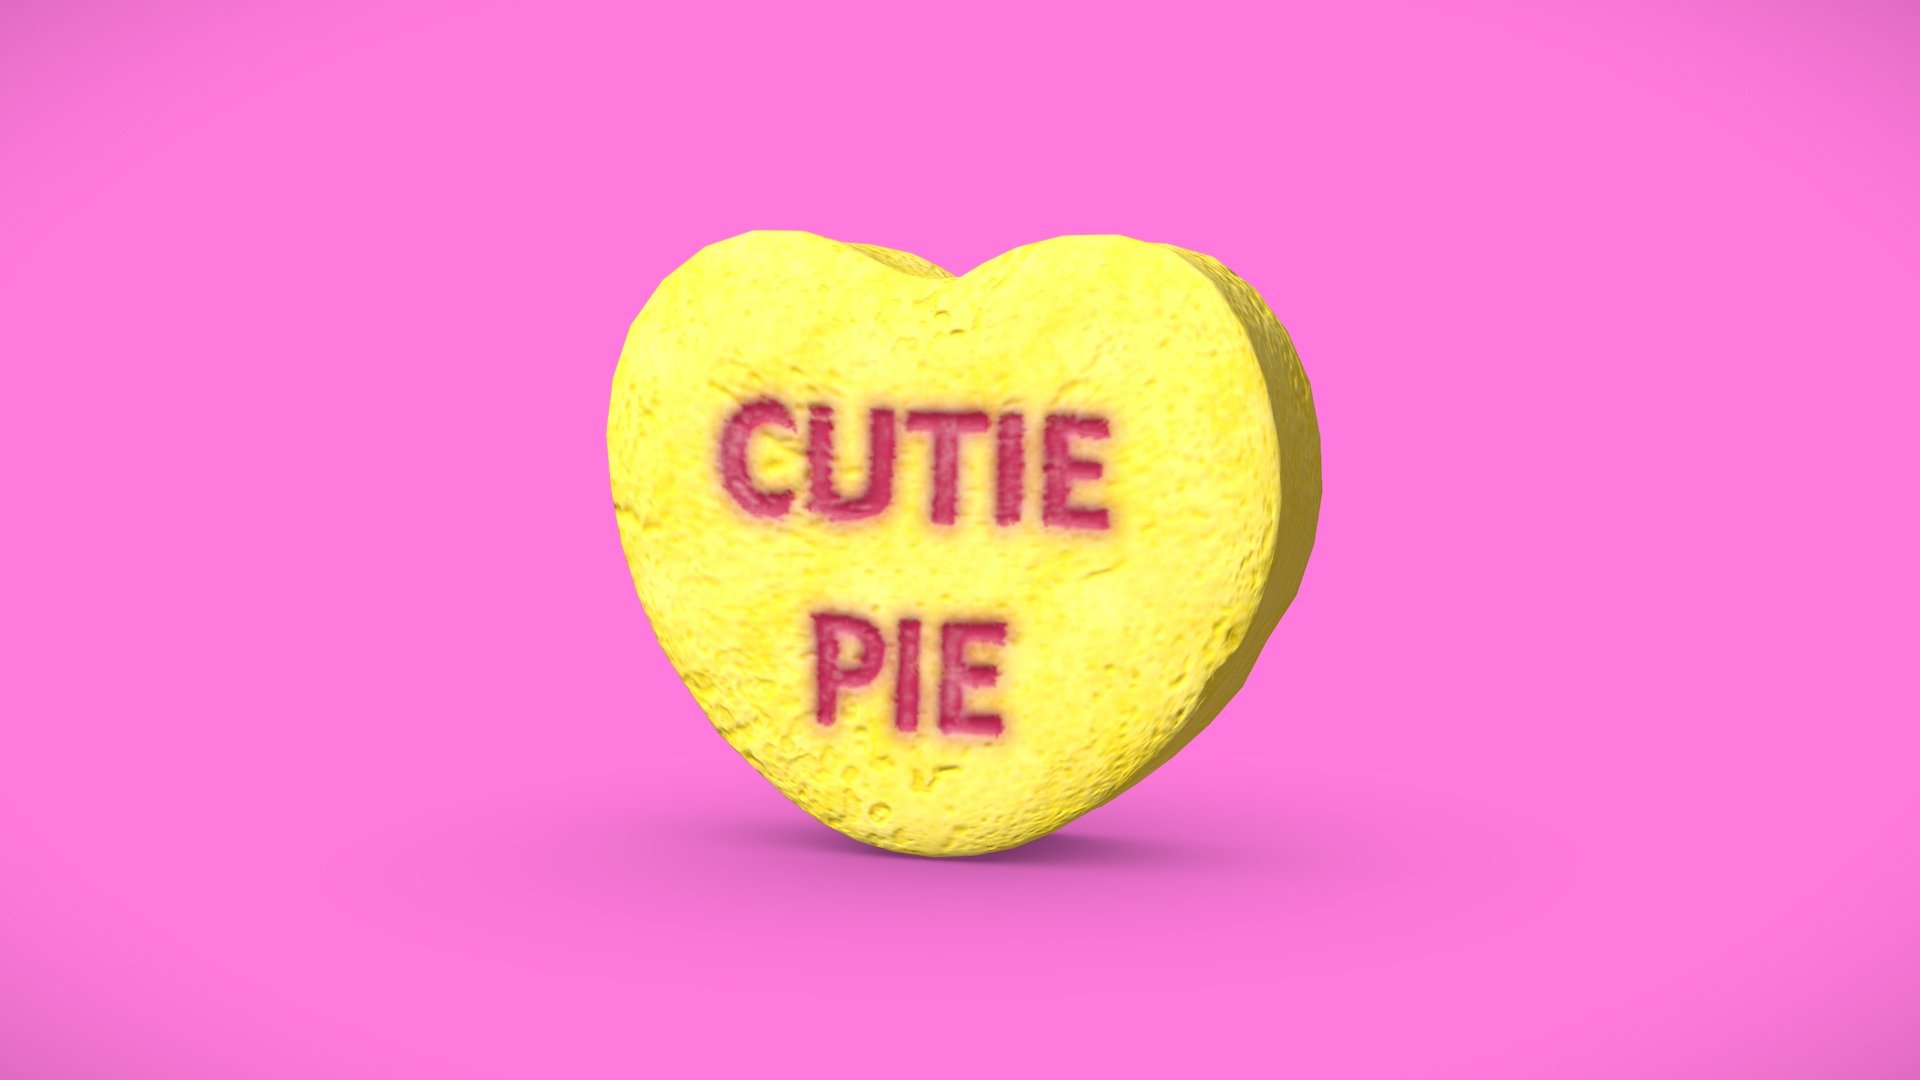 Heart Candy - Cutie Pie